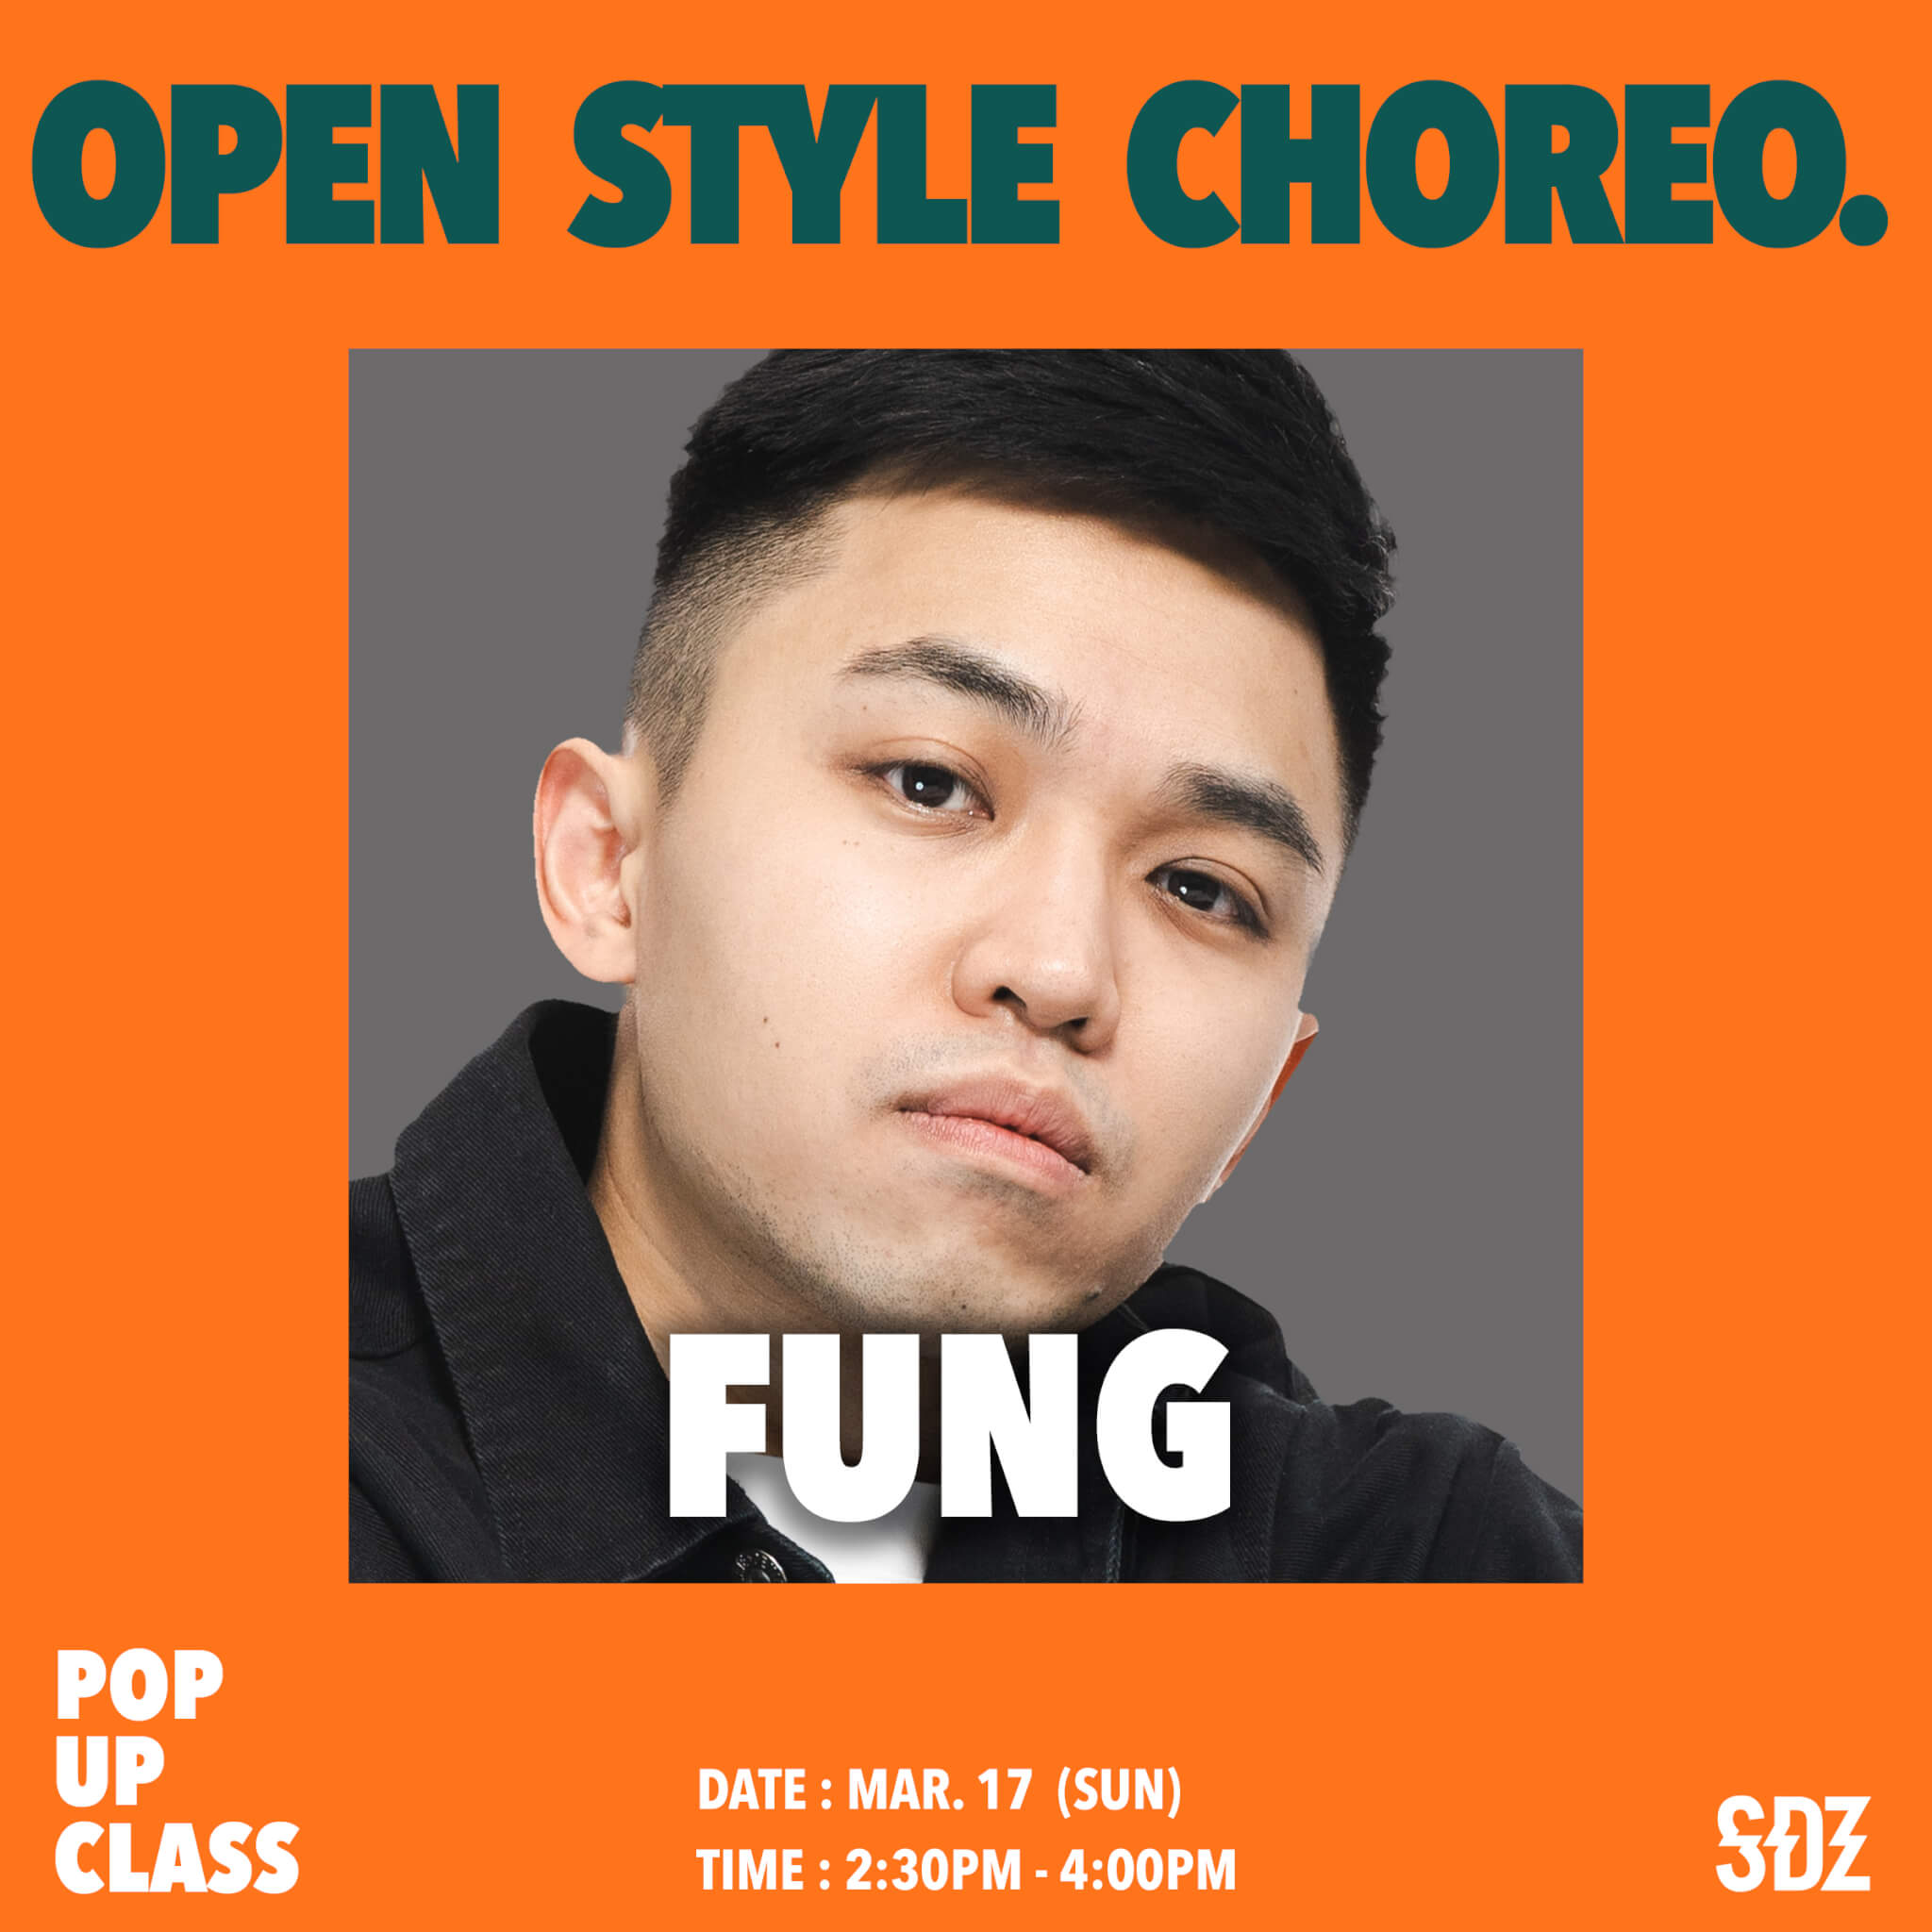 Pop Up Class – Open Style Choreo. – Fung